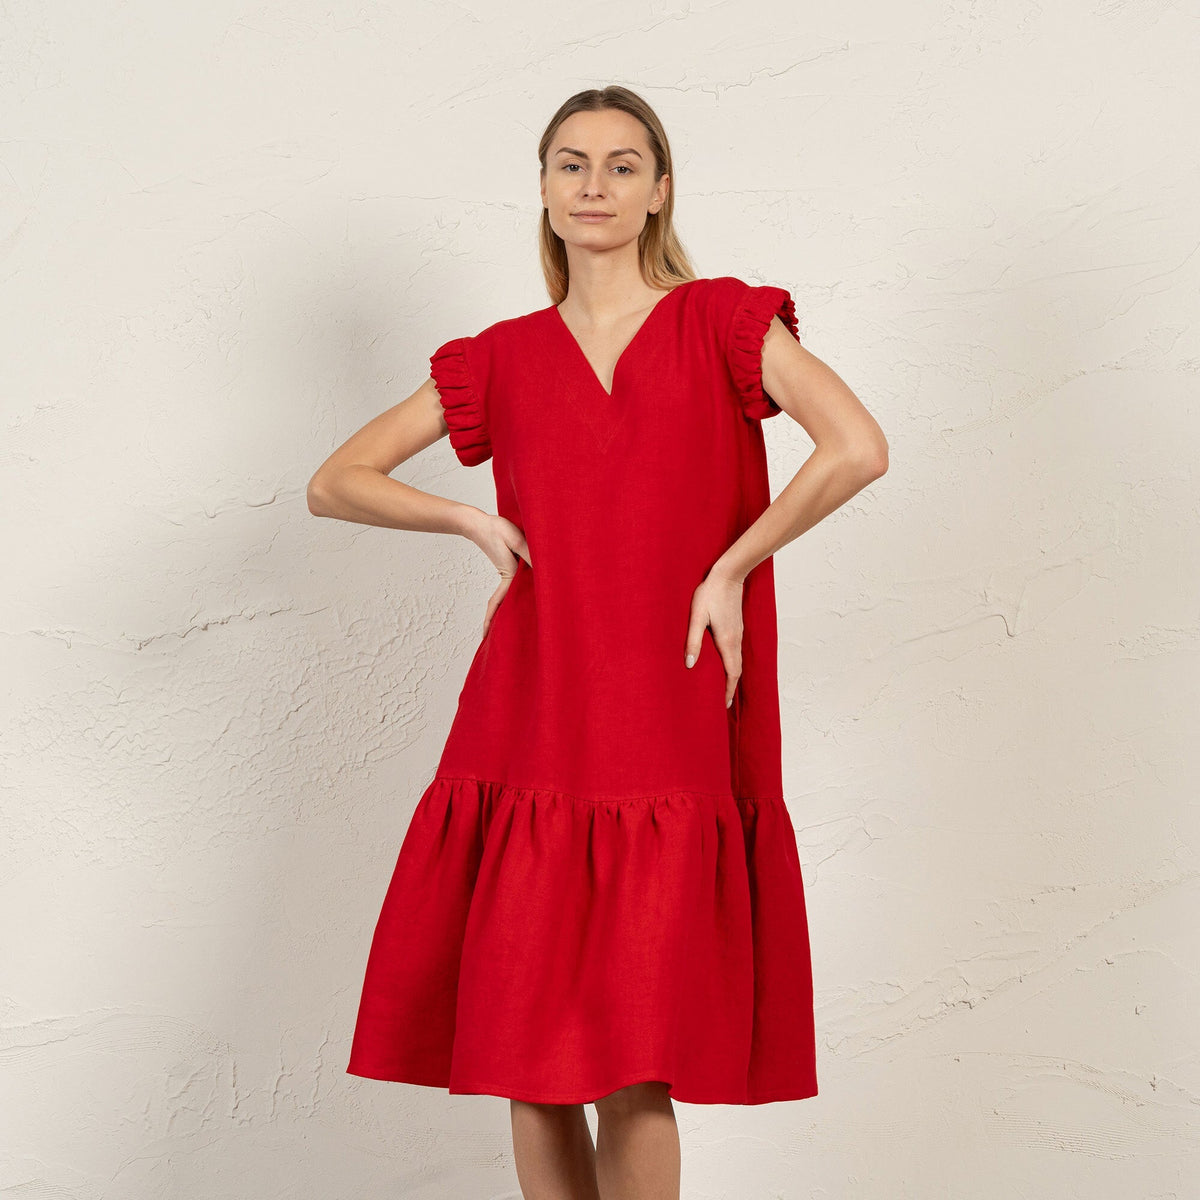 MENIQUE 100% Linen Dress with Ruffles Victoria